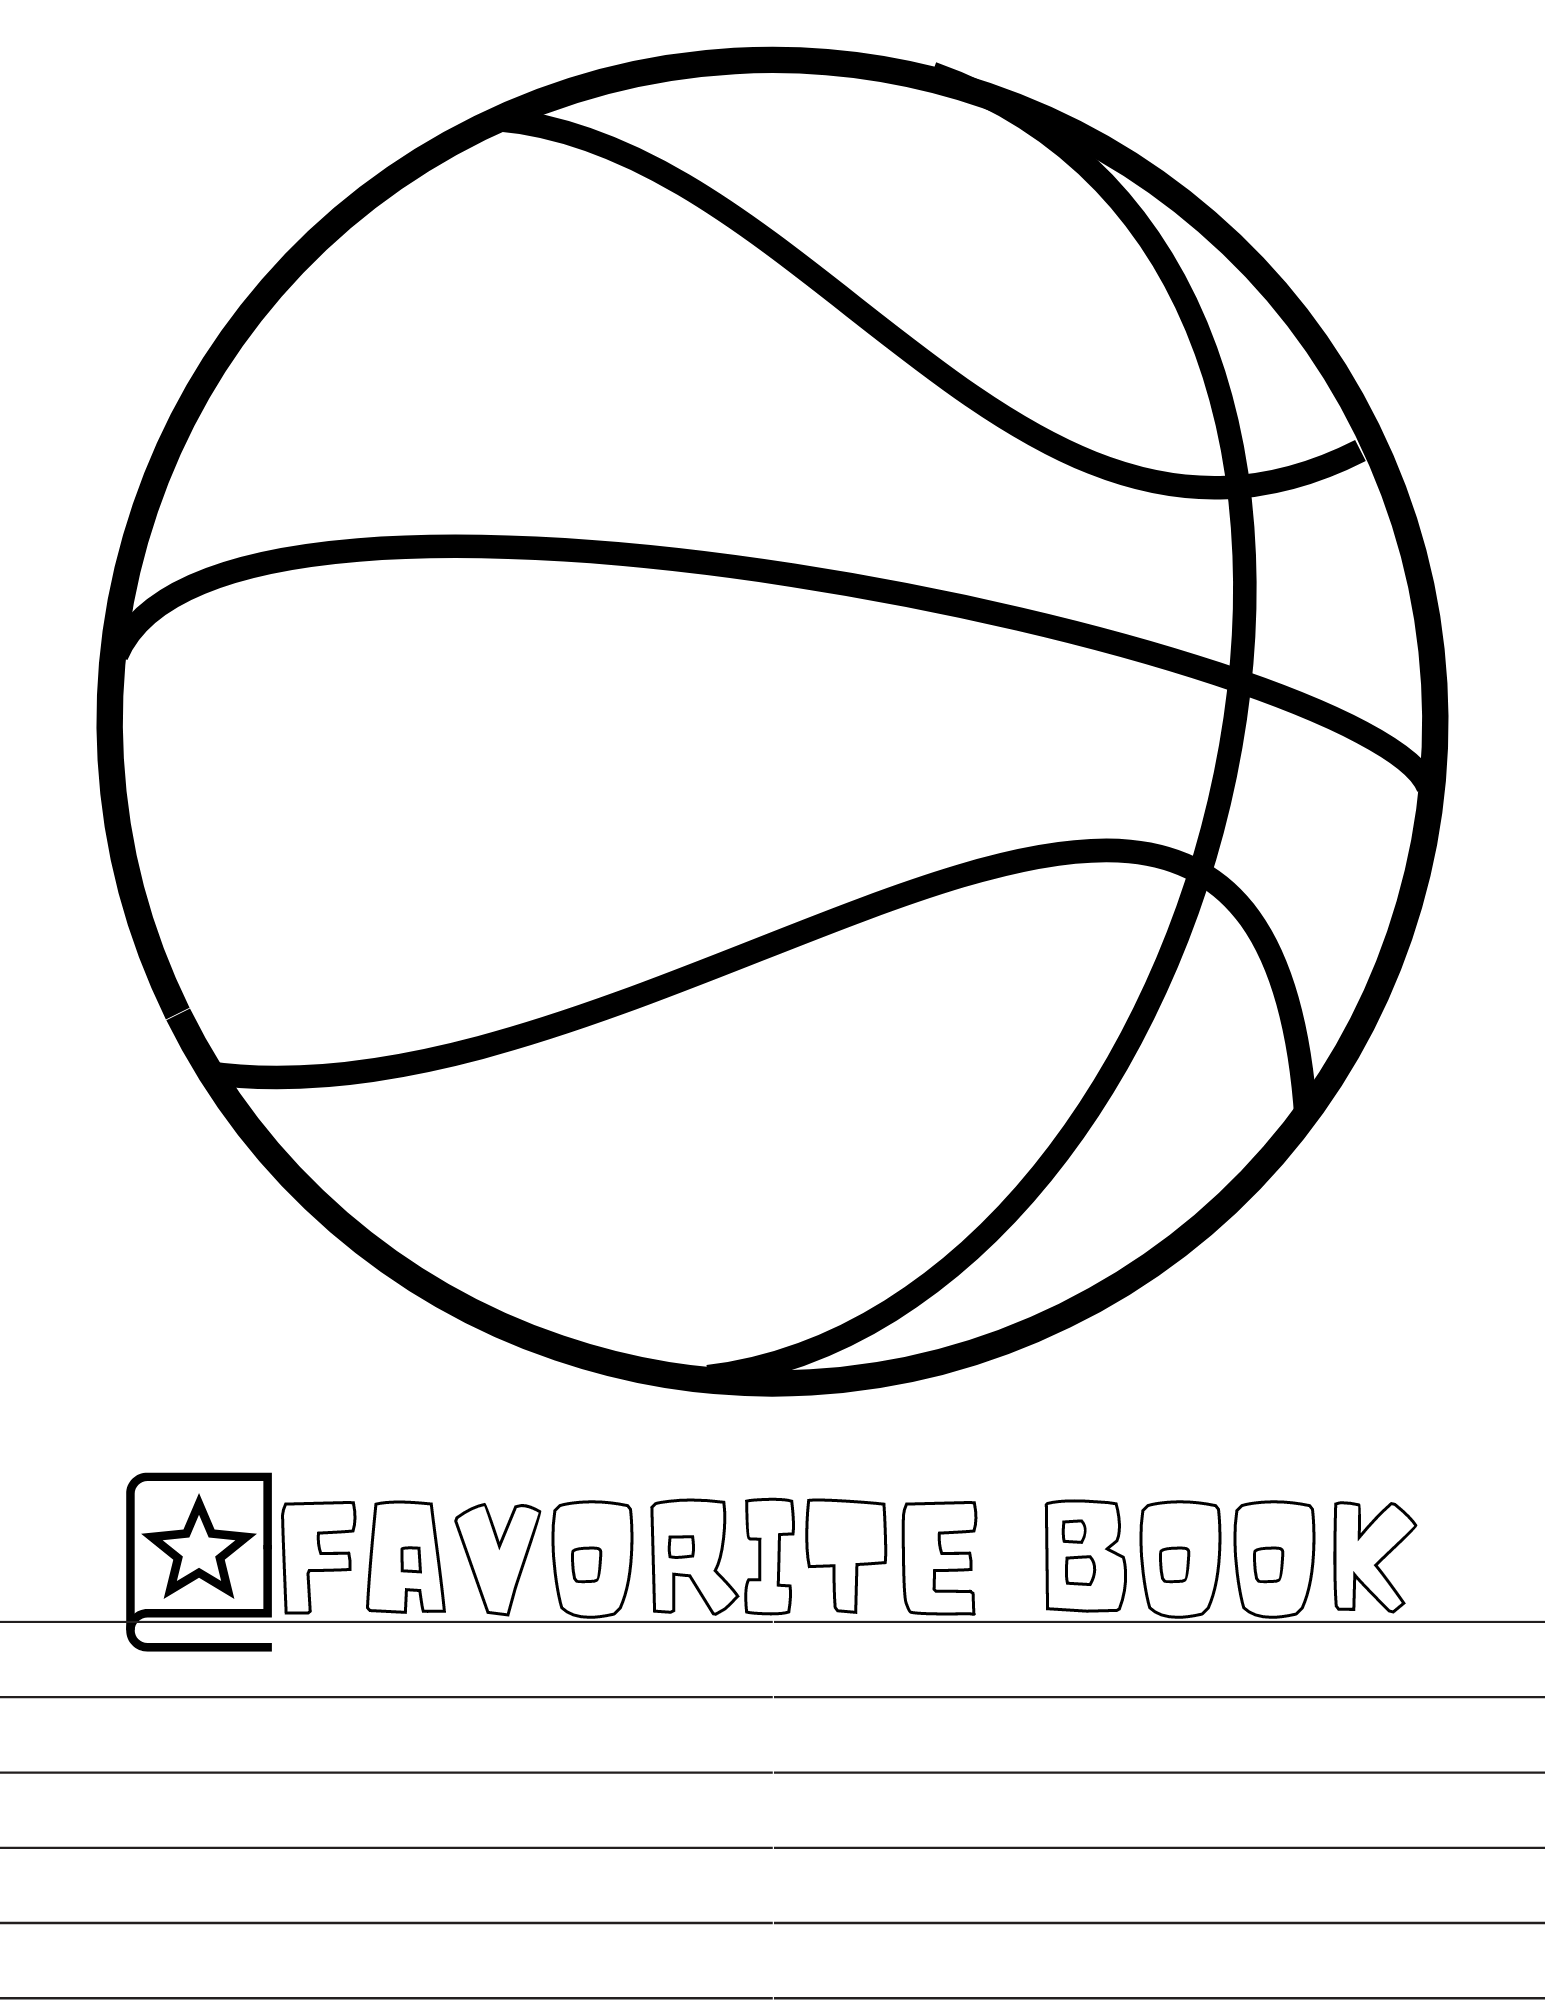 Basketball/Favorite Book